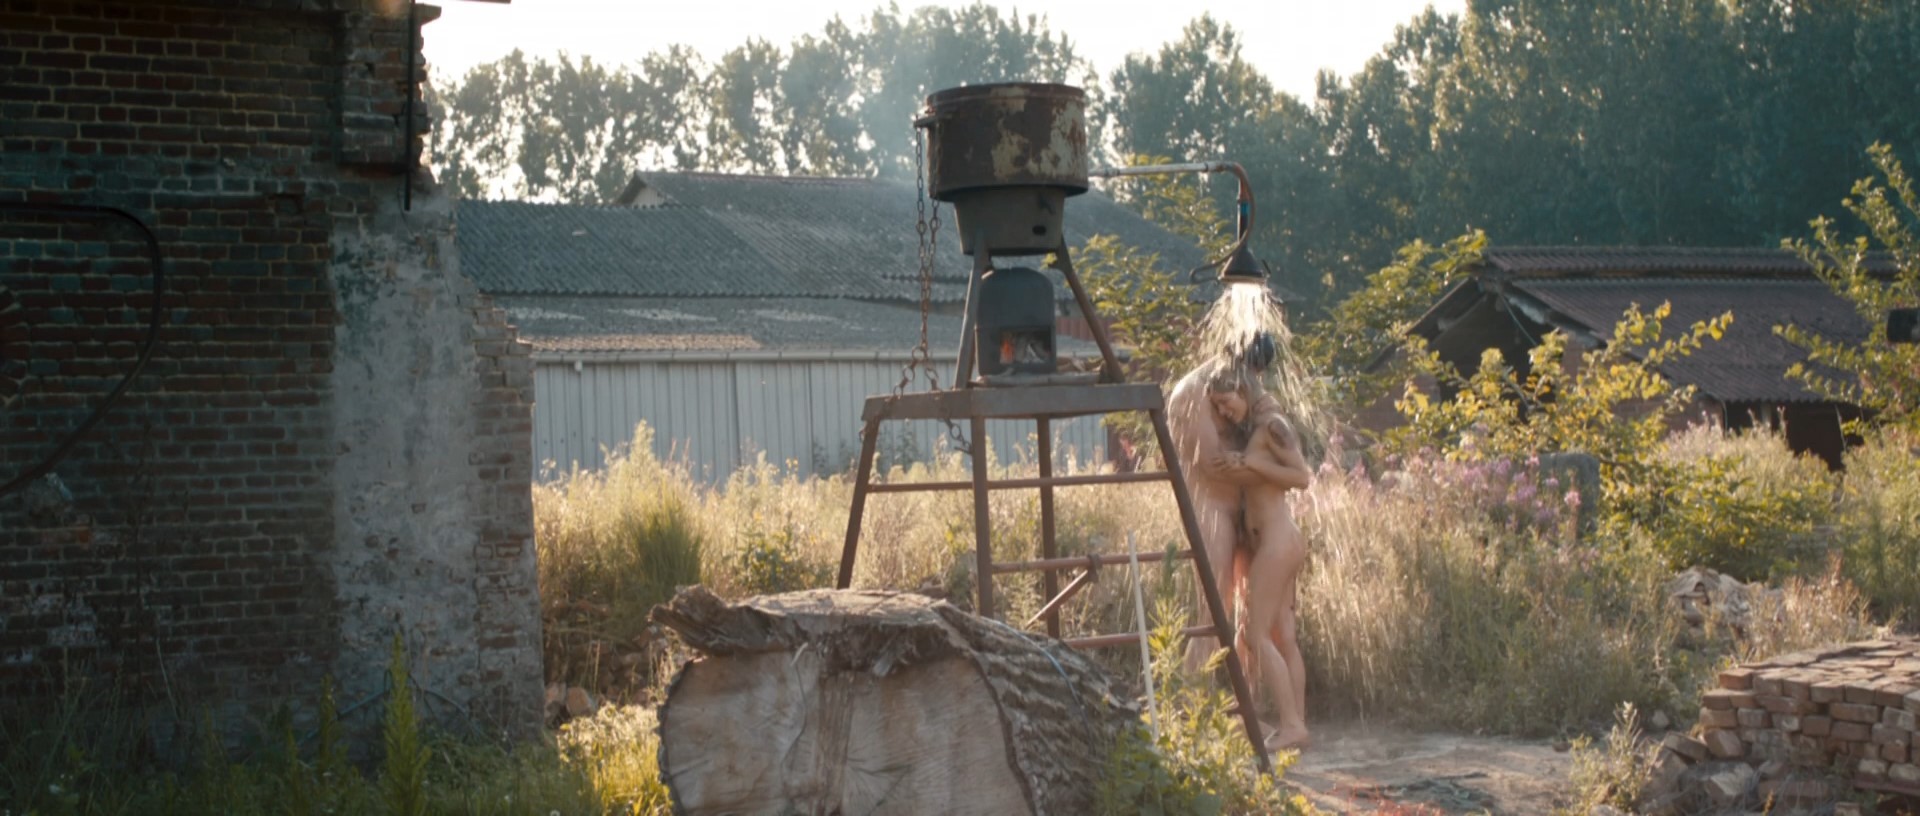 Верле Батенс nude pics.